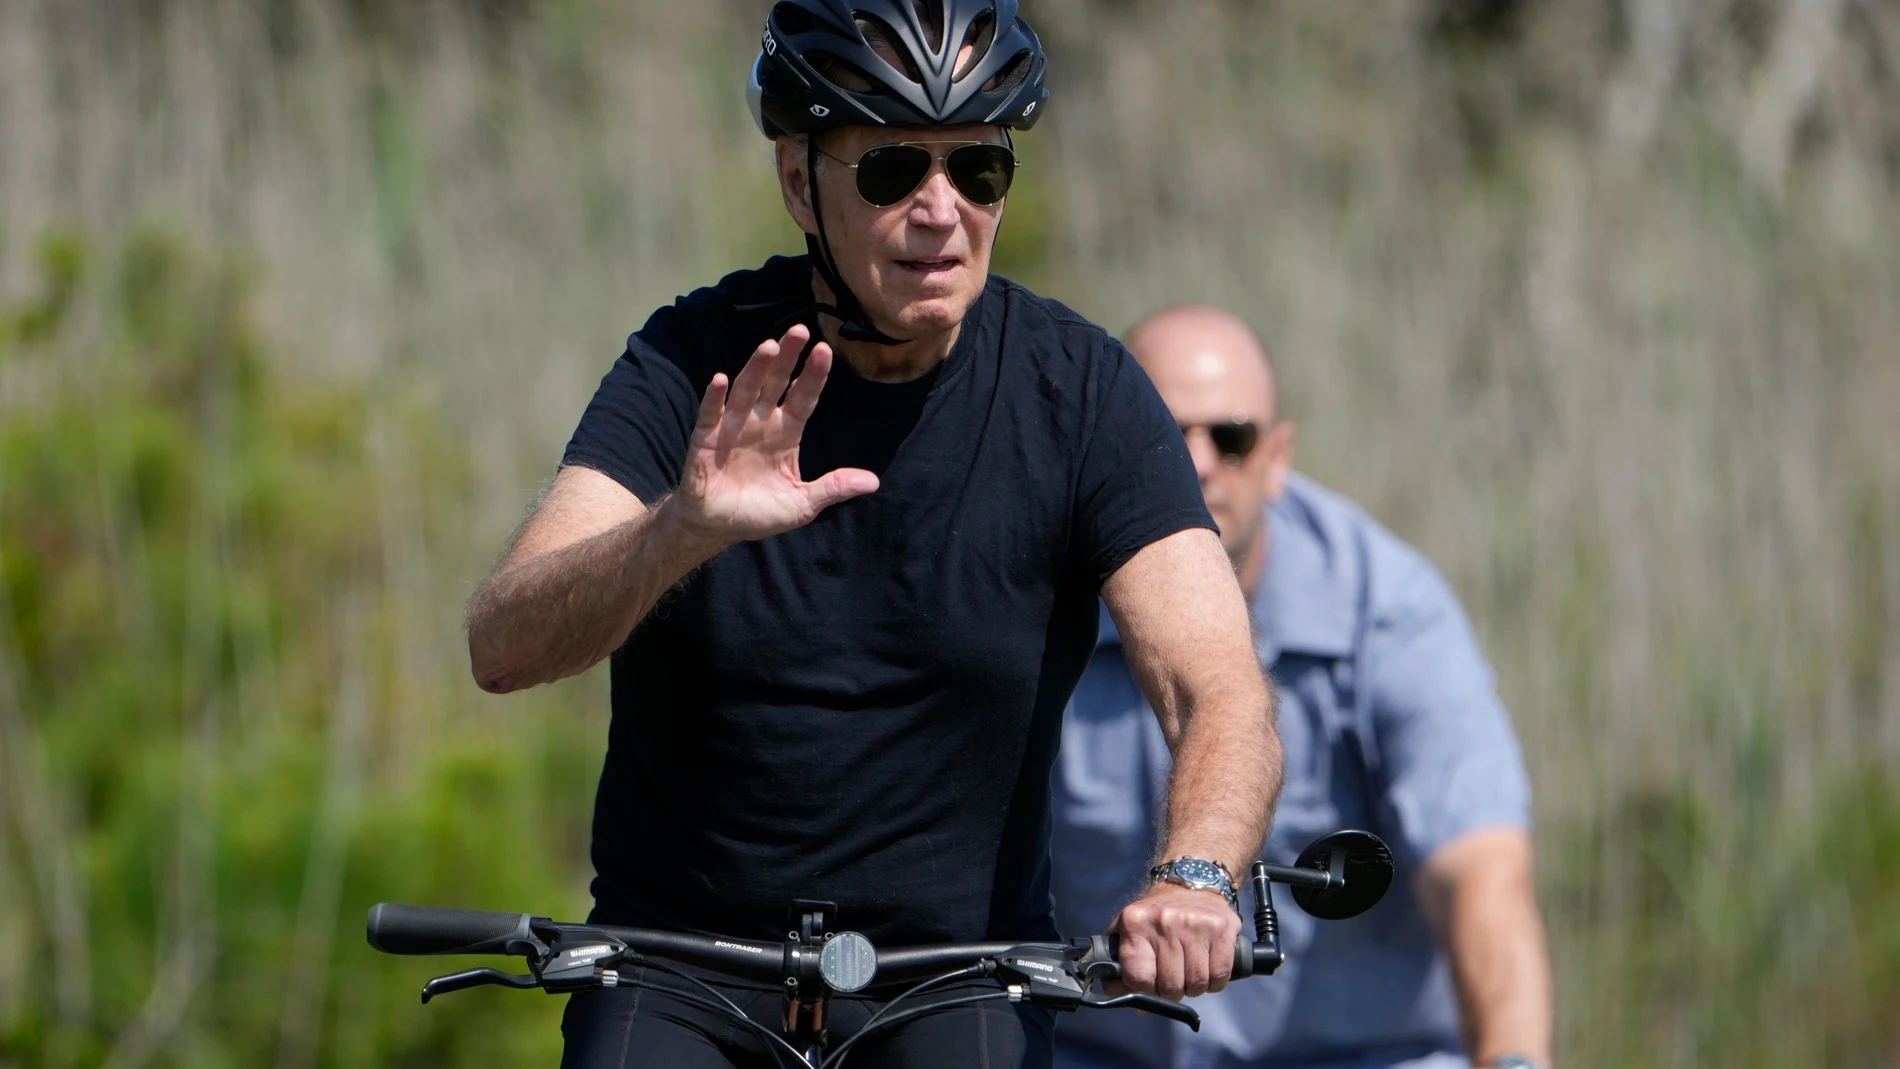 President Joe Biden rides a bike on a path at Gordons Pond in Rehoboth Beach, Del., Wednesday, Aug. 2, 2023. (AP Photo/Manuel Balce Ceneta)